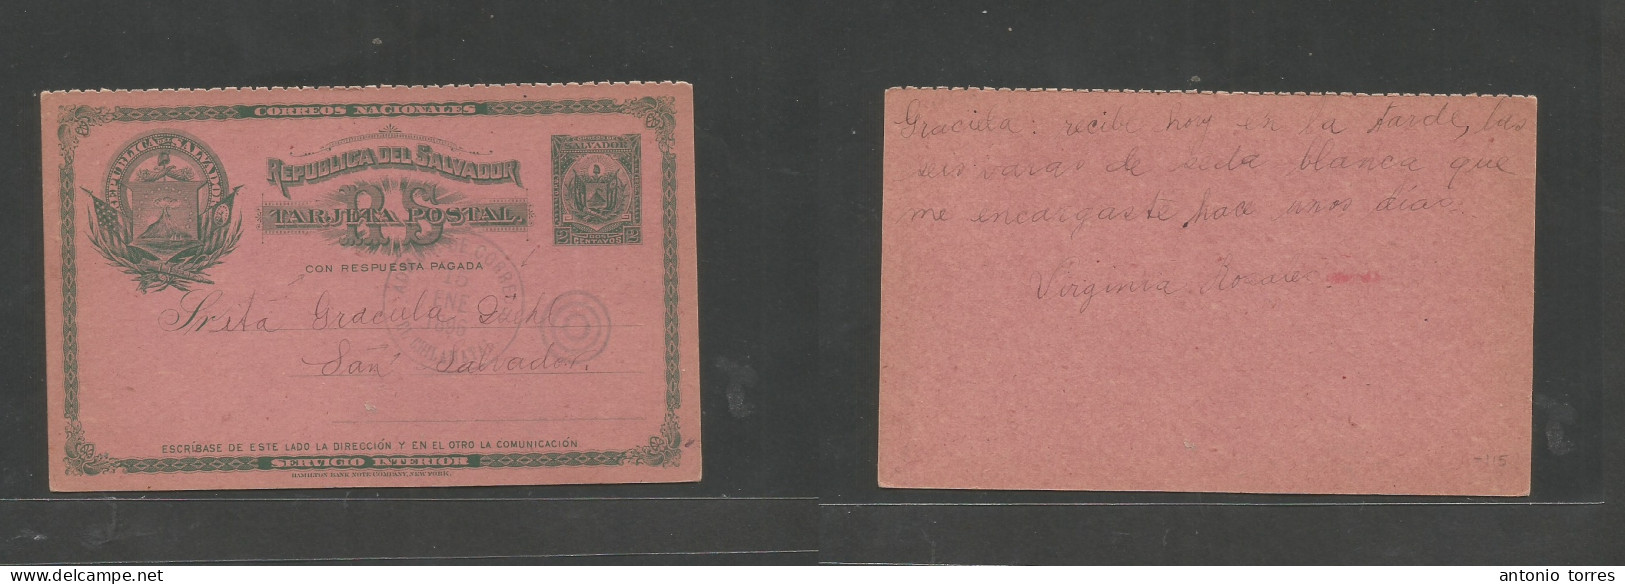 Salvador, El. 1895 (15 En) El Chilamatal - San Salvador. Doble 2c Green / Pink Stationary Card, Halfway Out, Depart Cds. - El Salvador